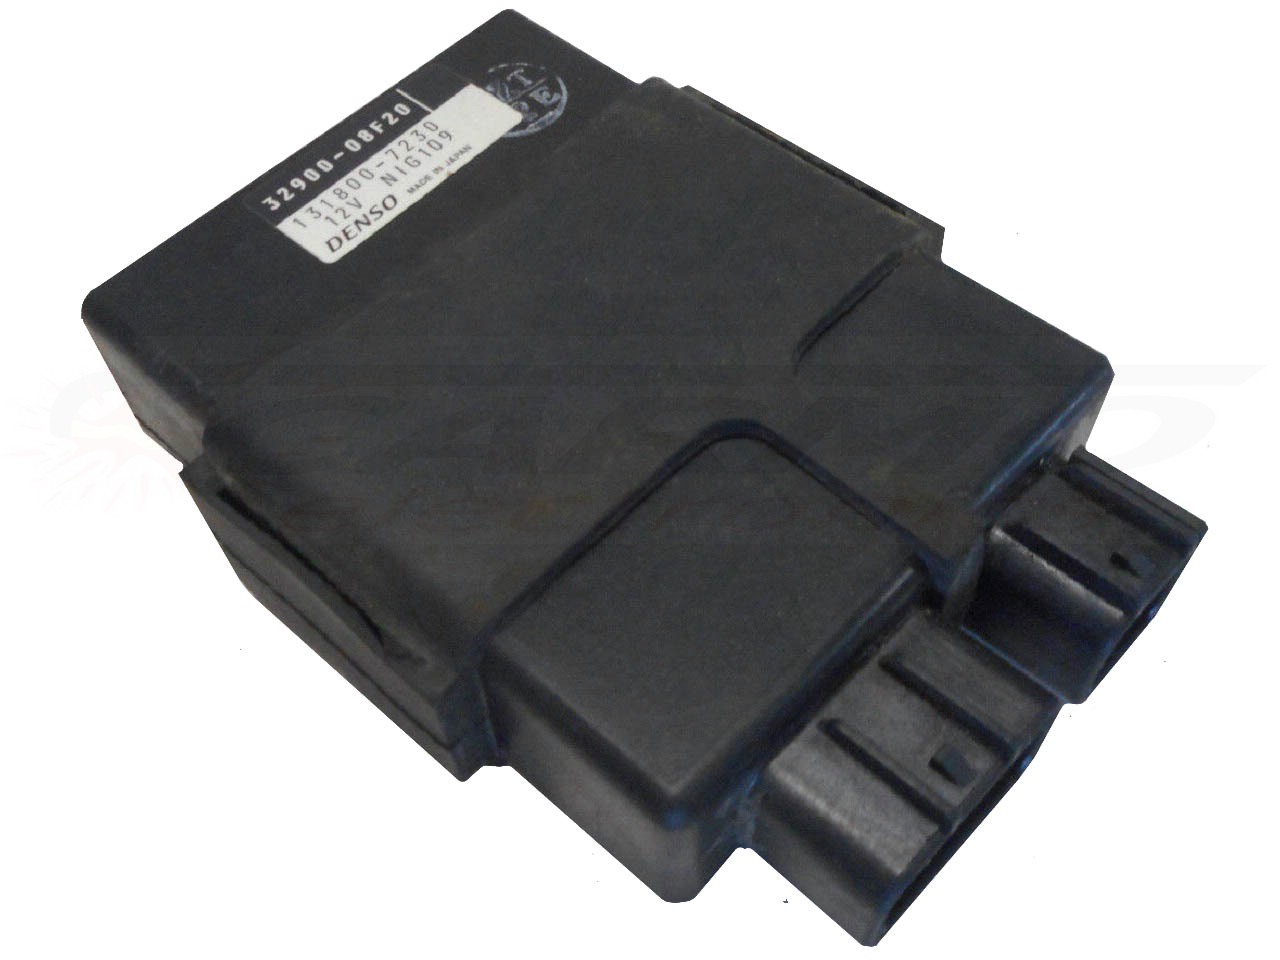 GSX600F Katana TCI CDI dispositif de commande boîte noire (32900-08F00, 32900-08F20)